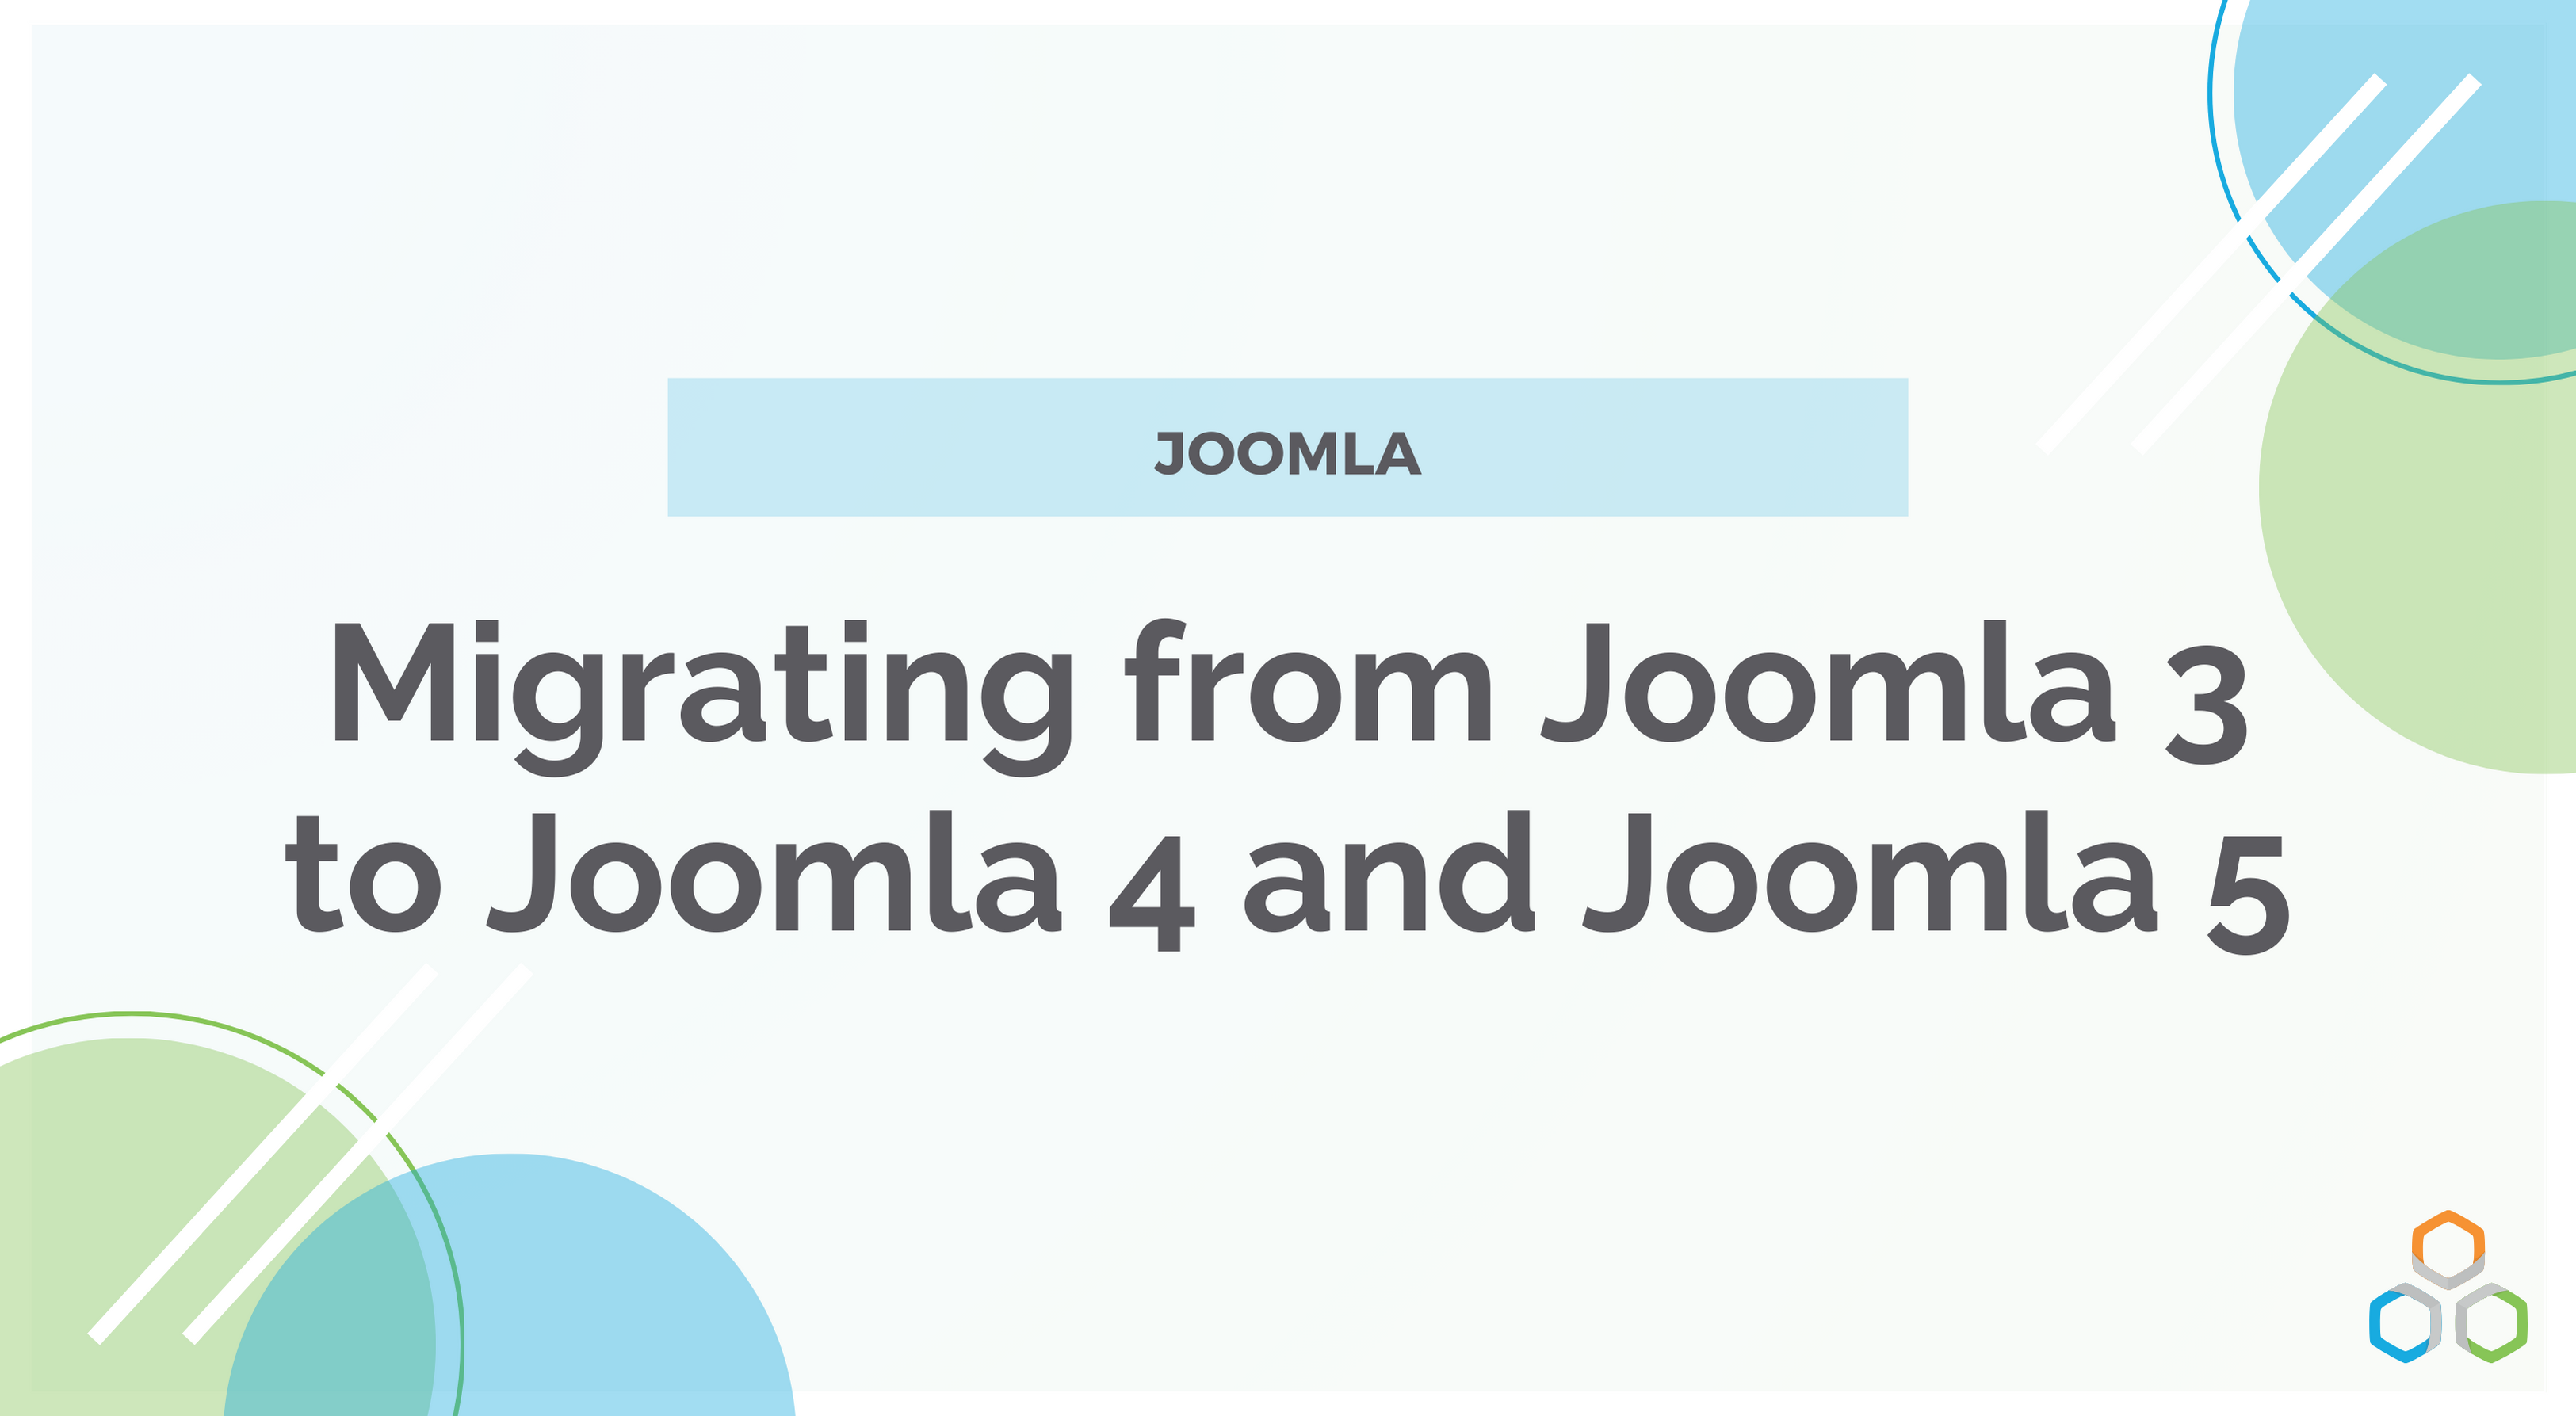 Migration from Joomla 3 and 4 to Joomla 5